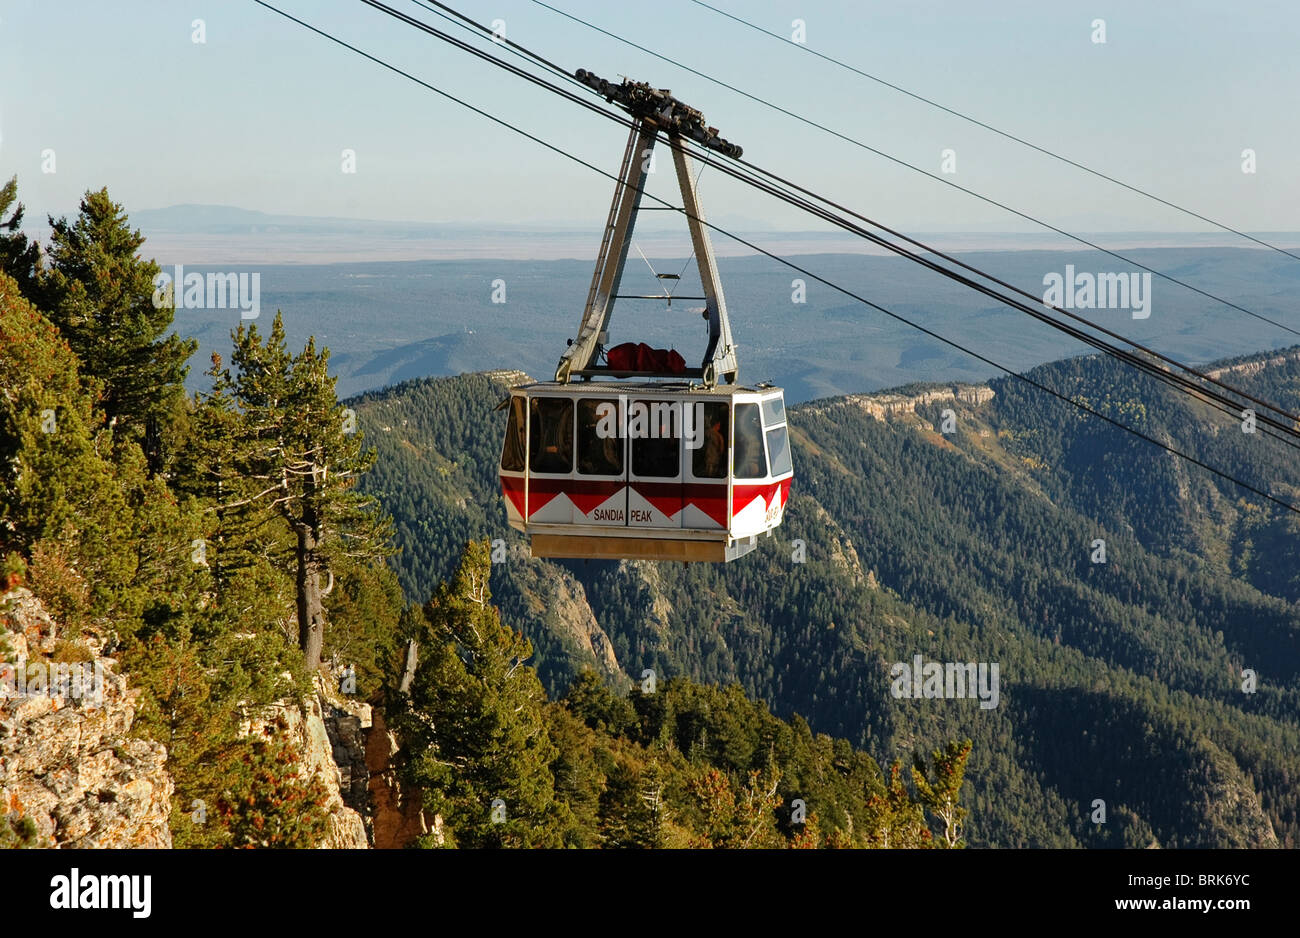 Sandia Peak Tramway arrives at top of mountain, Albuquerque New Mexico Stock Photo